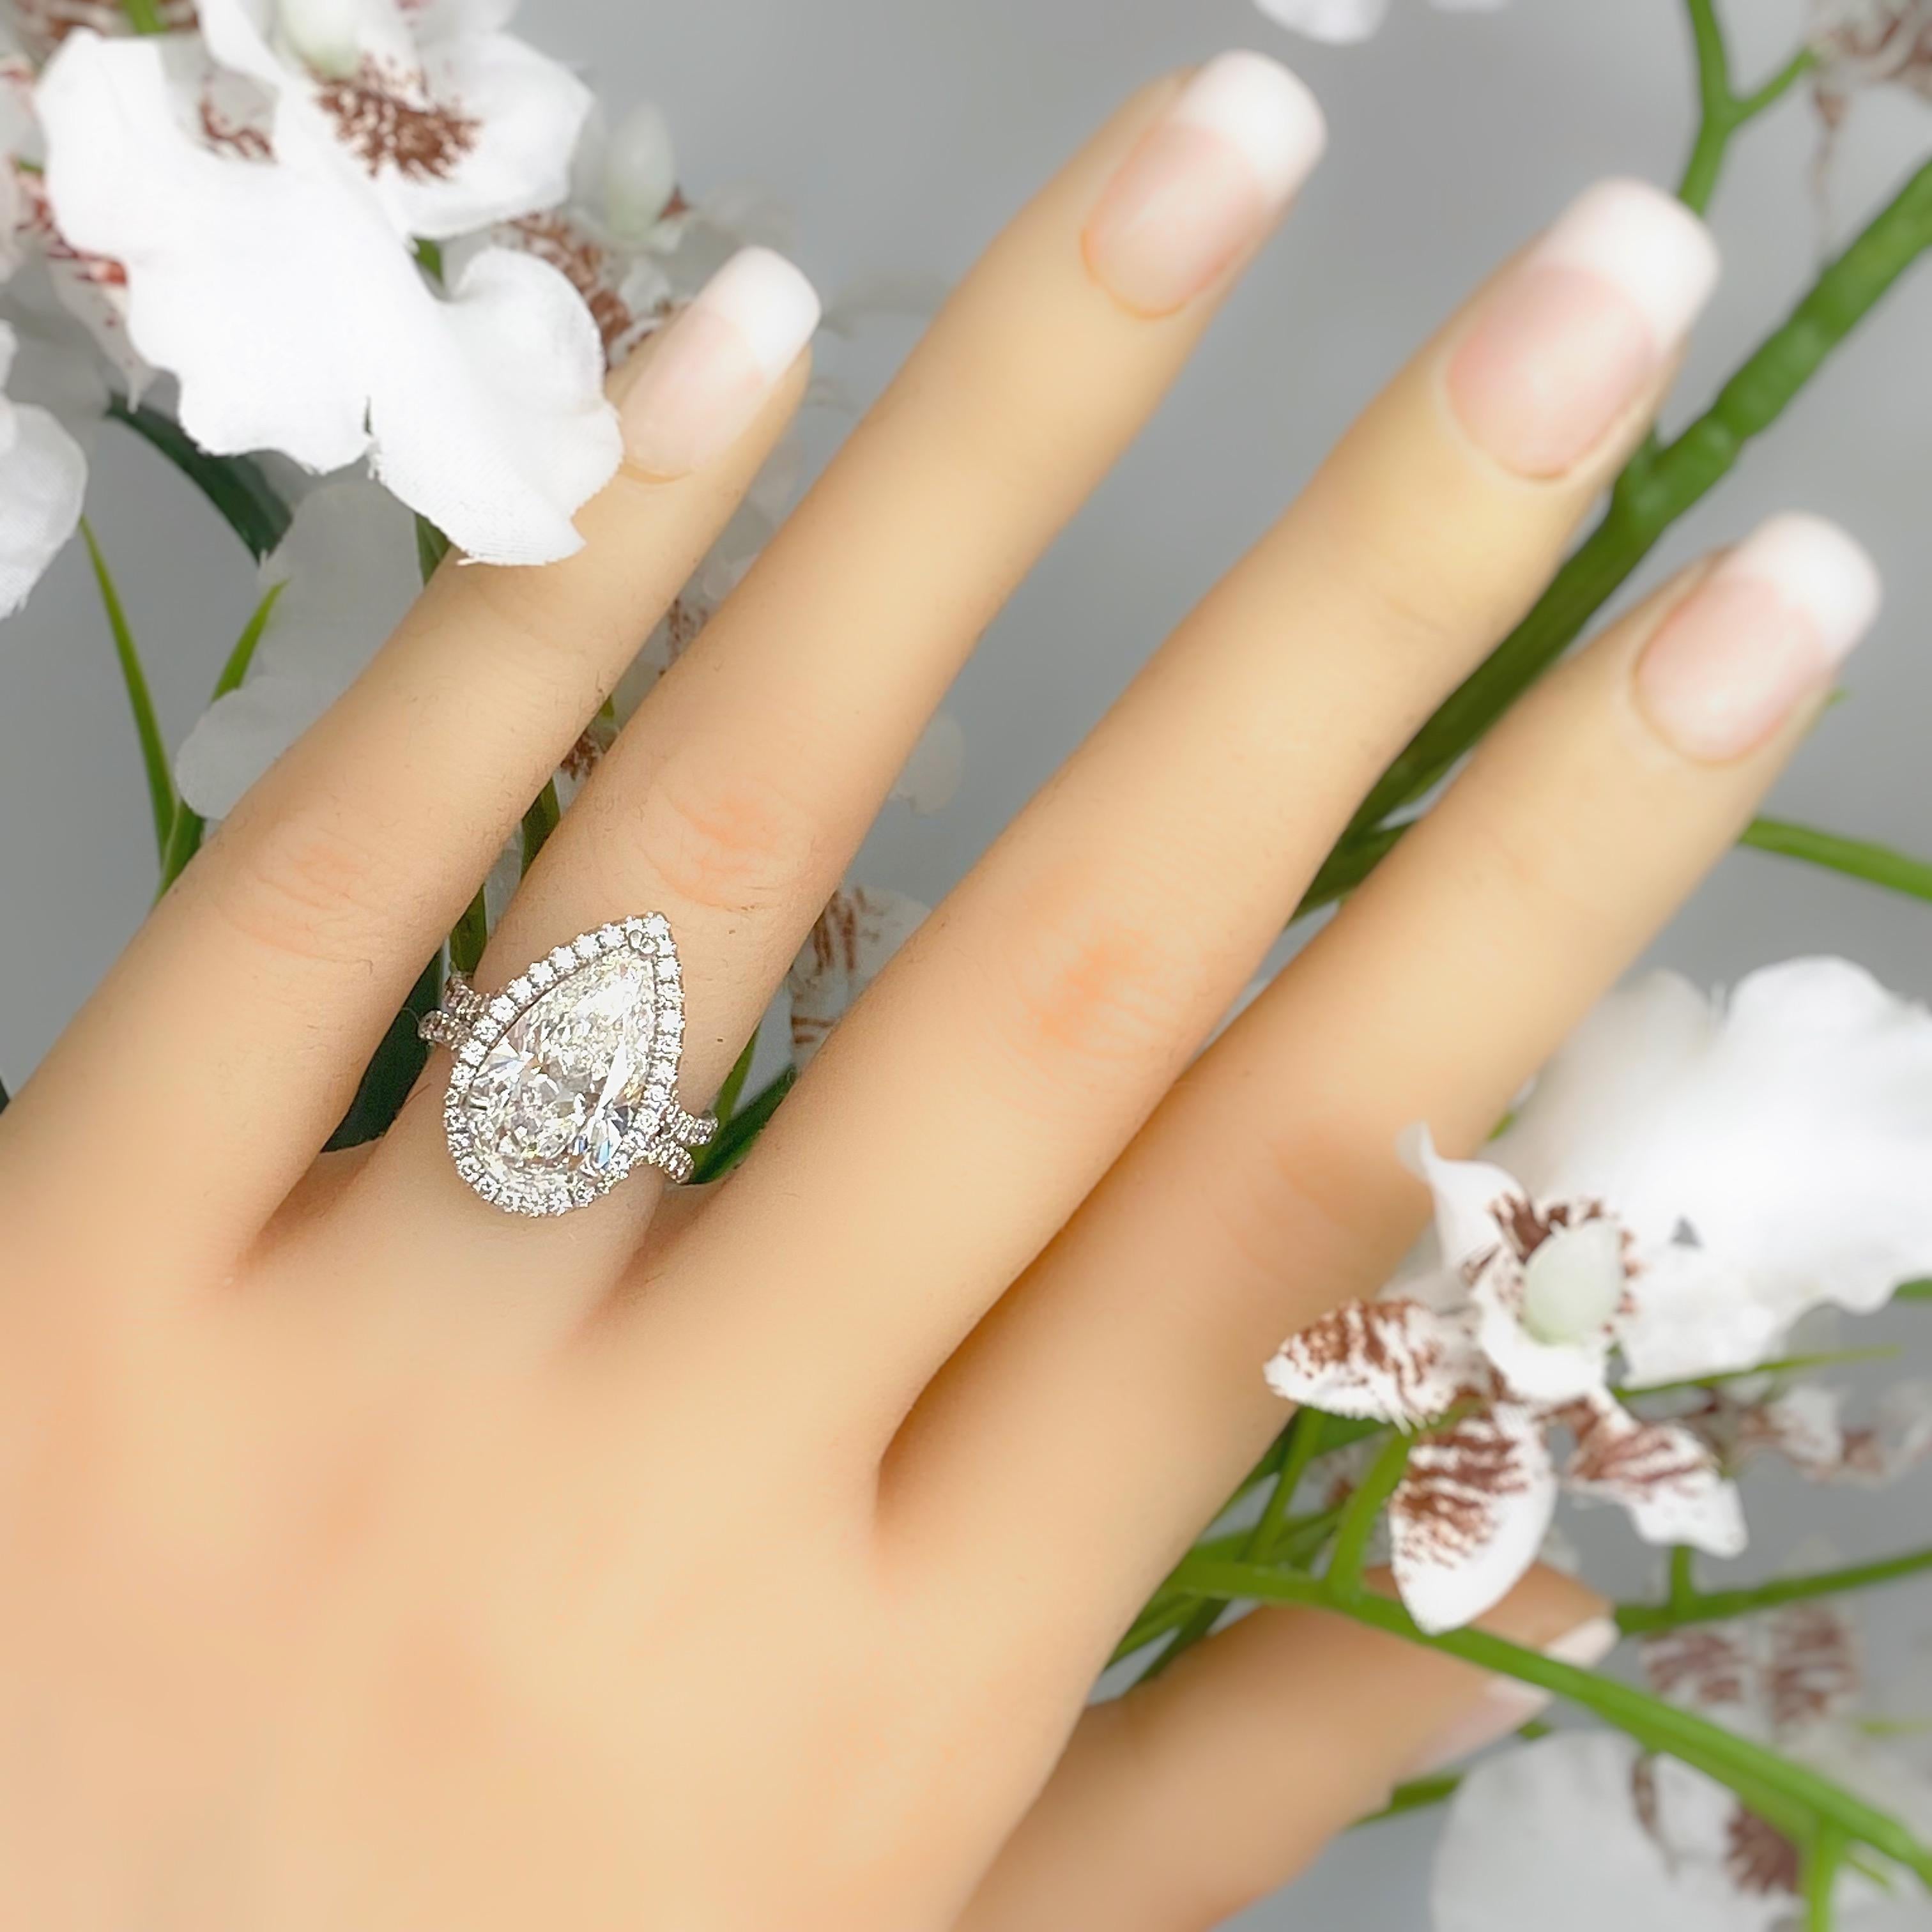 UNEEK Custom Pear Shape Diamond Halo Diamond Engagement Ring
Style:  Halo Split Shank
GIA:  1176672447
Metal:  14kt White Gold
Size:  4.5 
TCW:  5.90 tcw
Main Diamond:  Pear Shape Diamond 5.03 cts 
Color & Clarity:  E, SI1
Diamond has GIA 1176672447